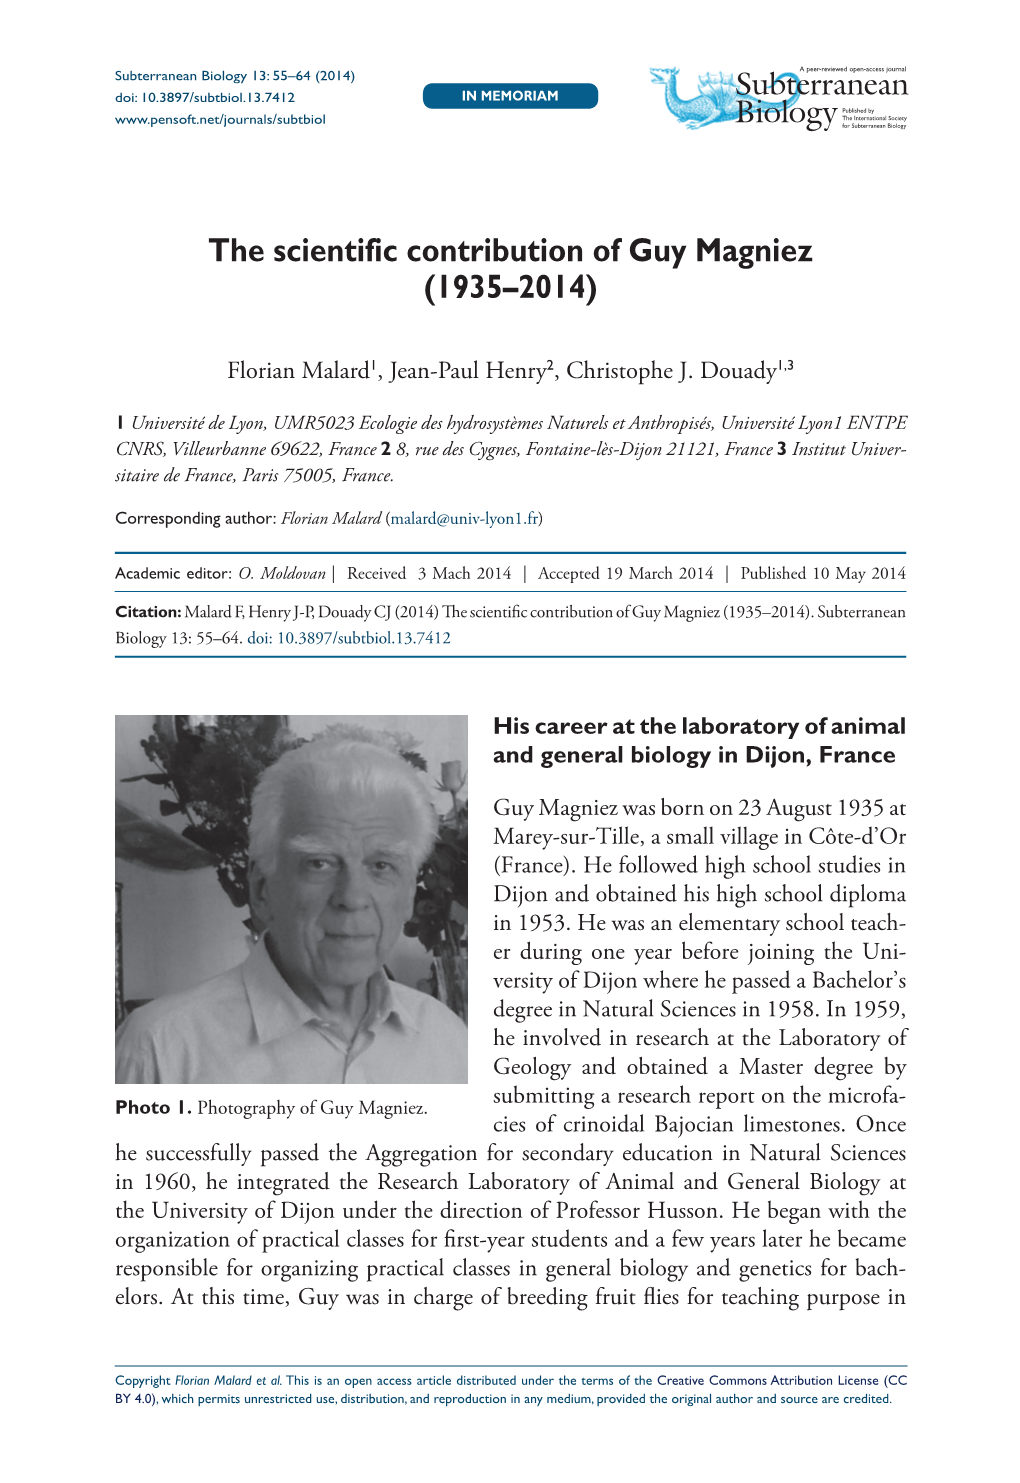 The Scientific Contribution of Guy Magniez (1935–2014)